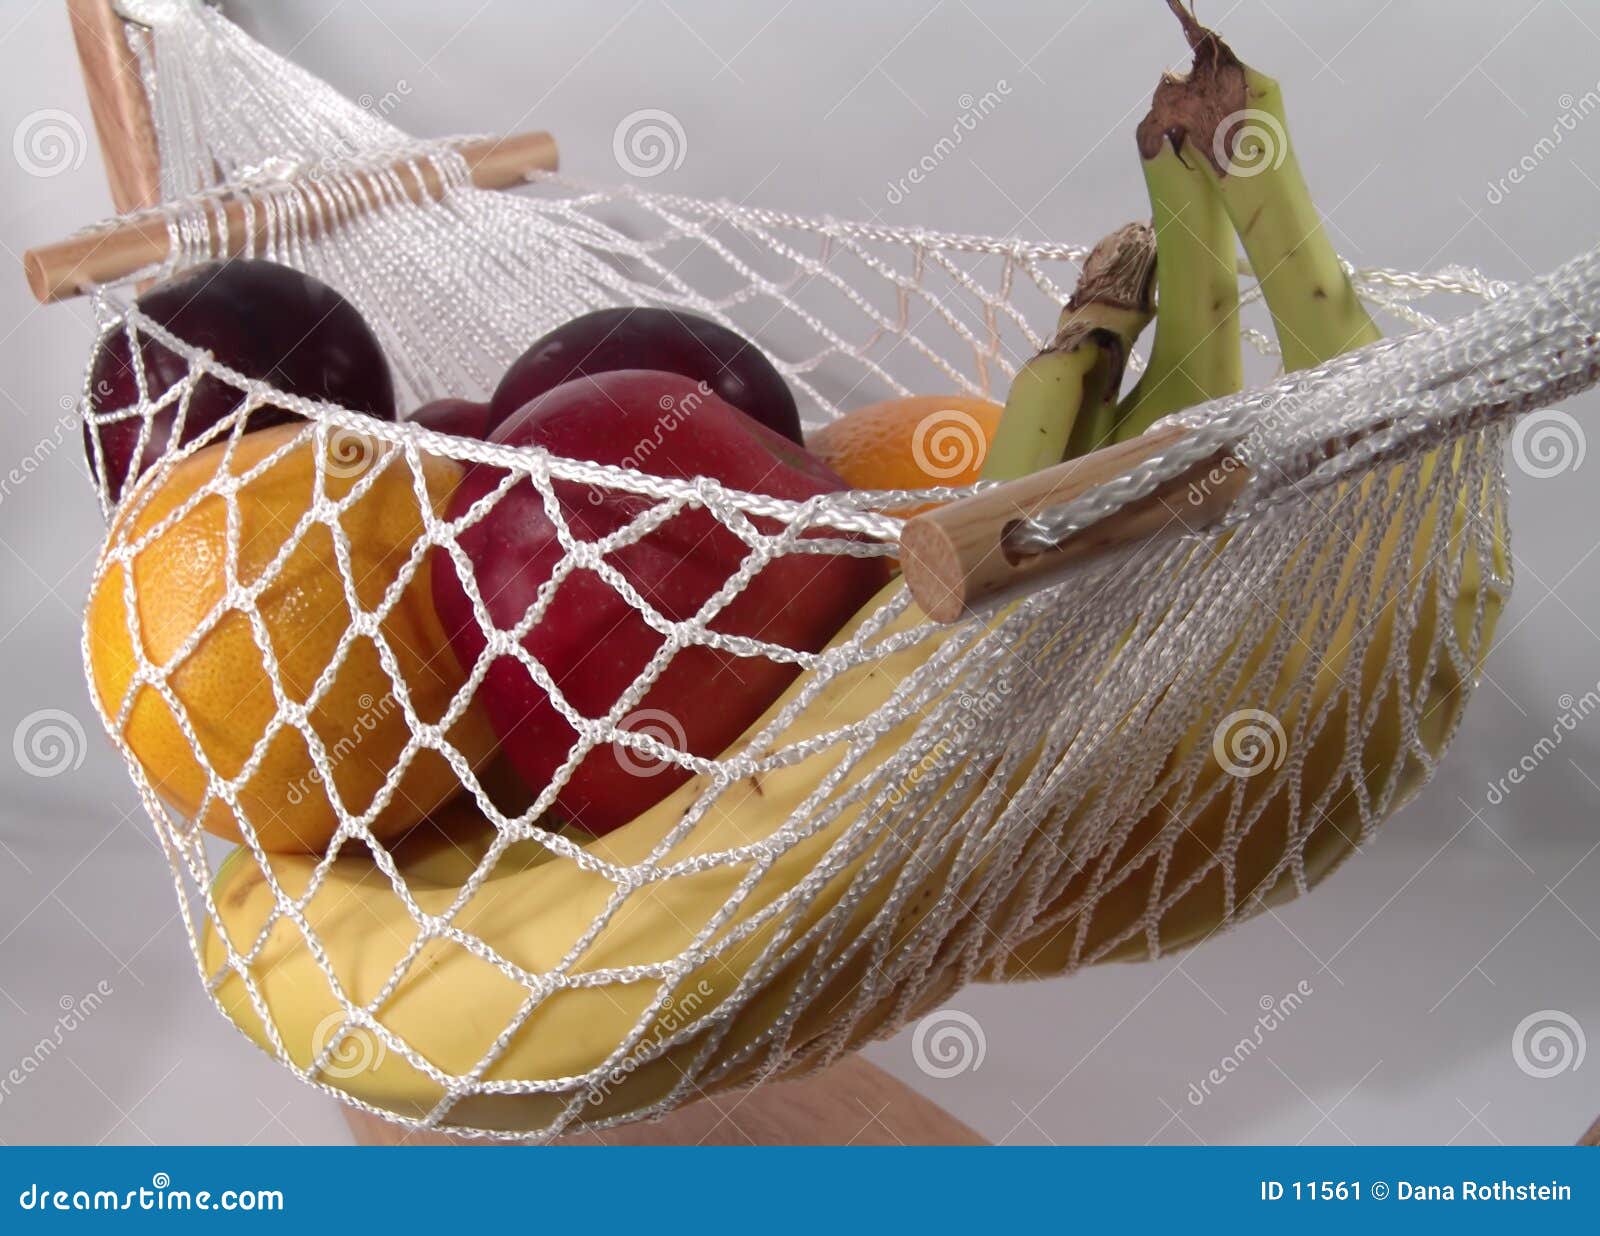 fruit-hammock-11561.jpg